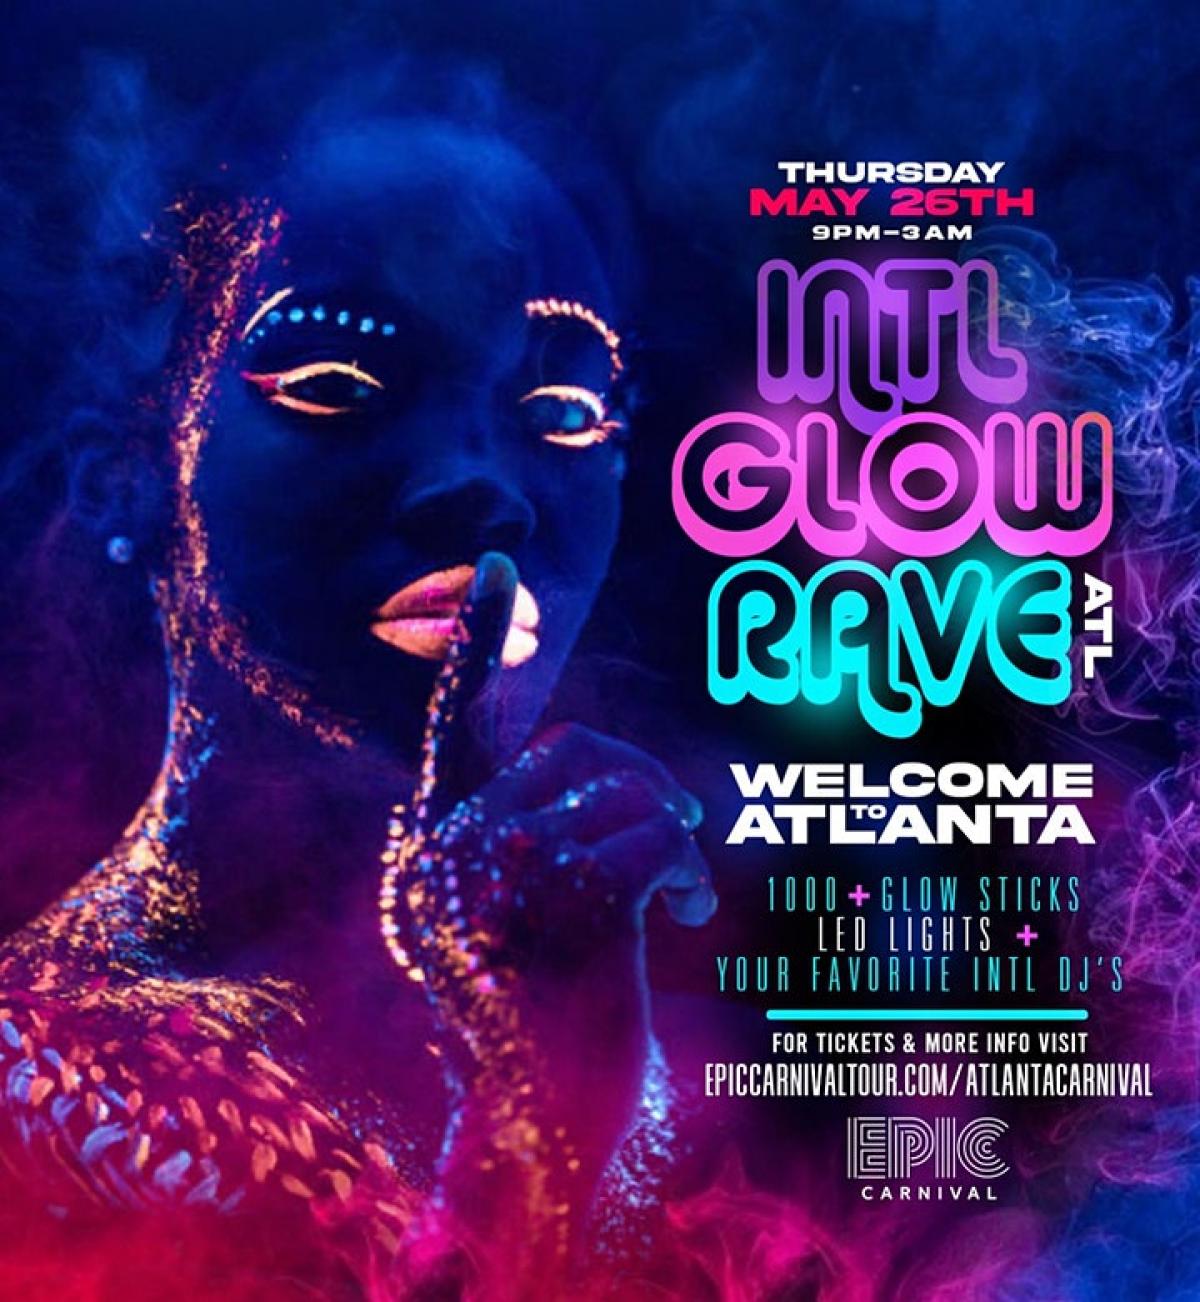 INTL Glow Rave Atlanta | Welcome To Atlanta Carnival flyer or graphic.